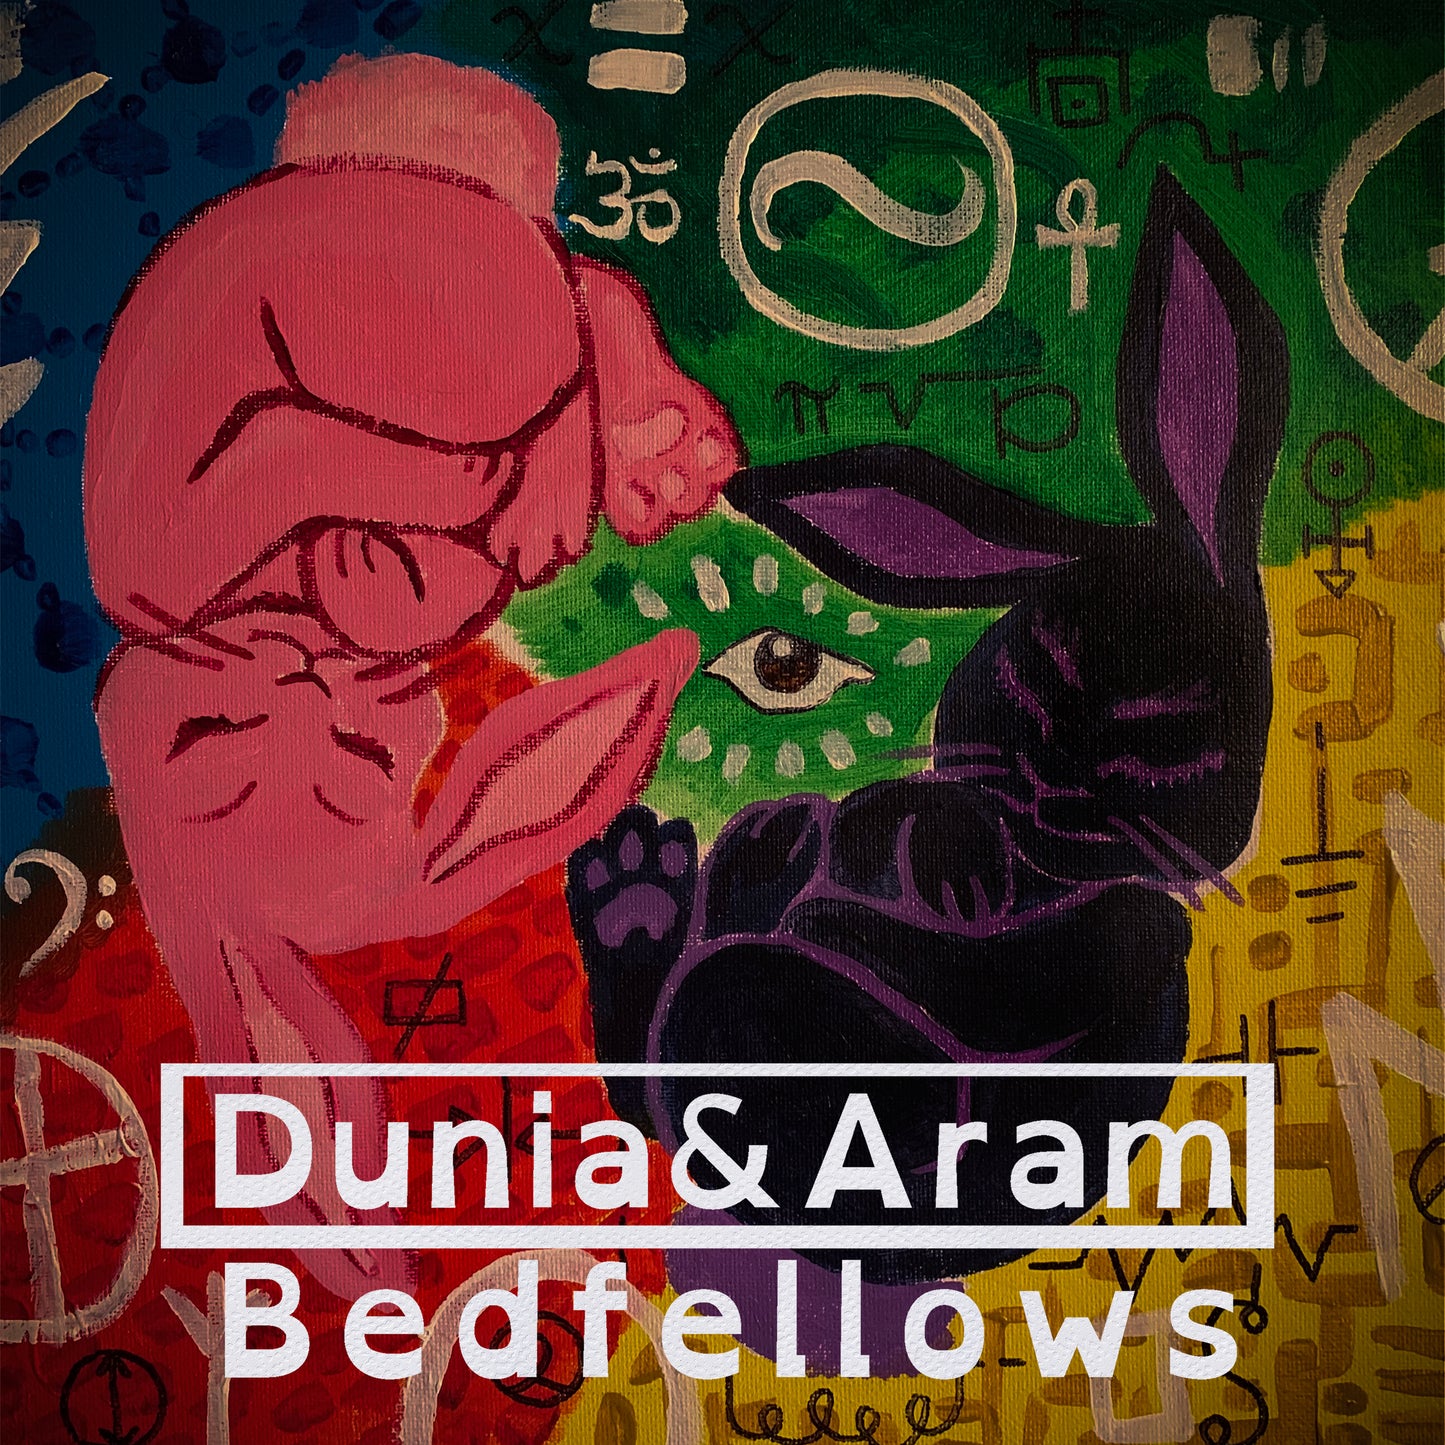 Dunia & Aram - "Bedfellows" (Digipack CD)